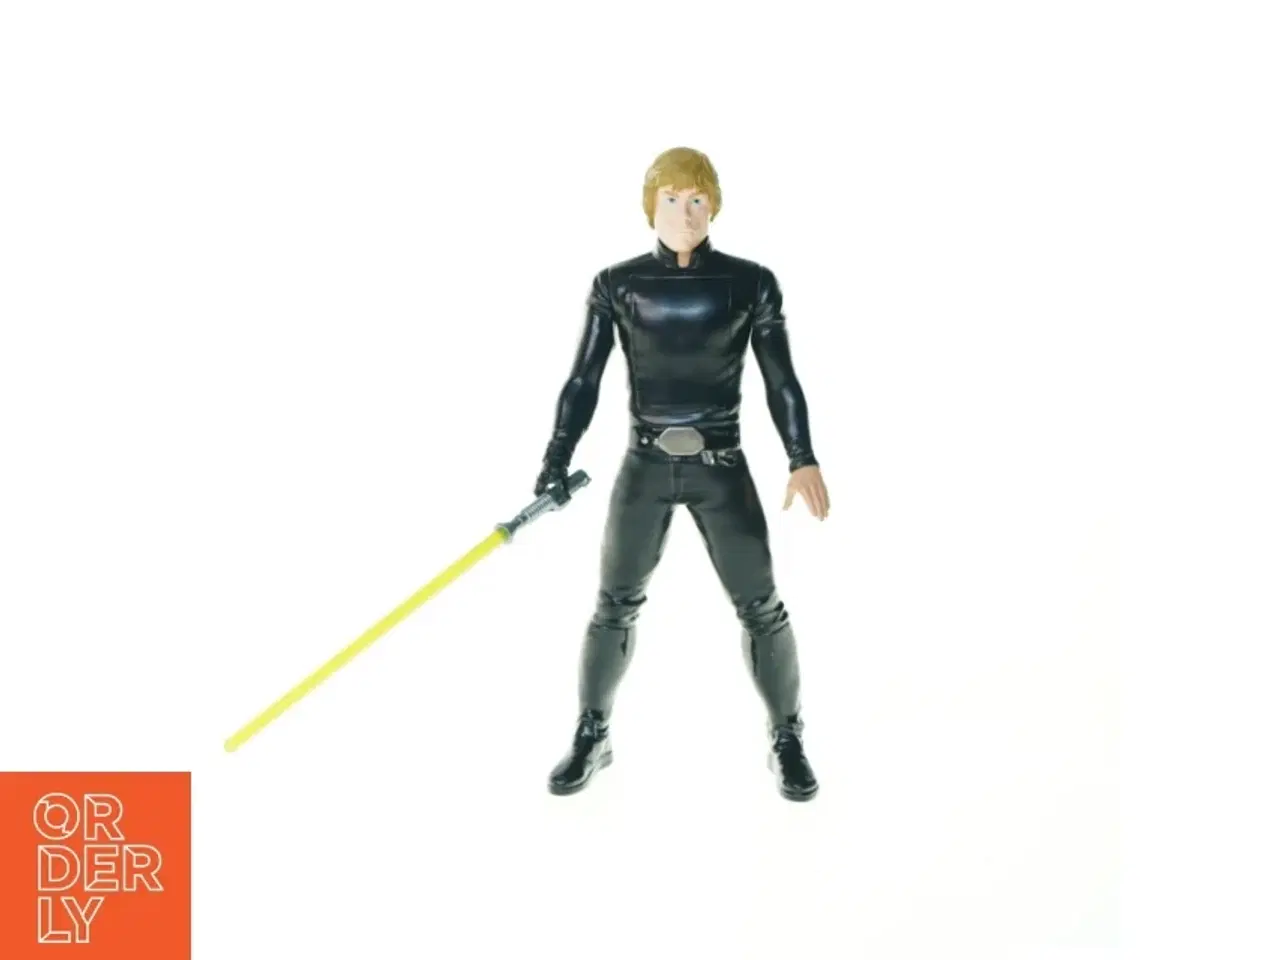 Billede 1 - Star wars luke skywalker fra Hasbro (str. 23 x 10 cm)